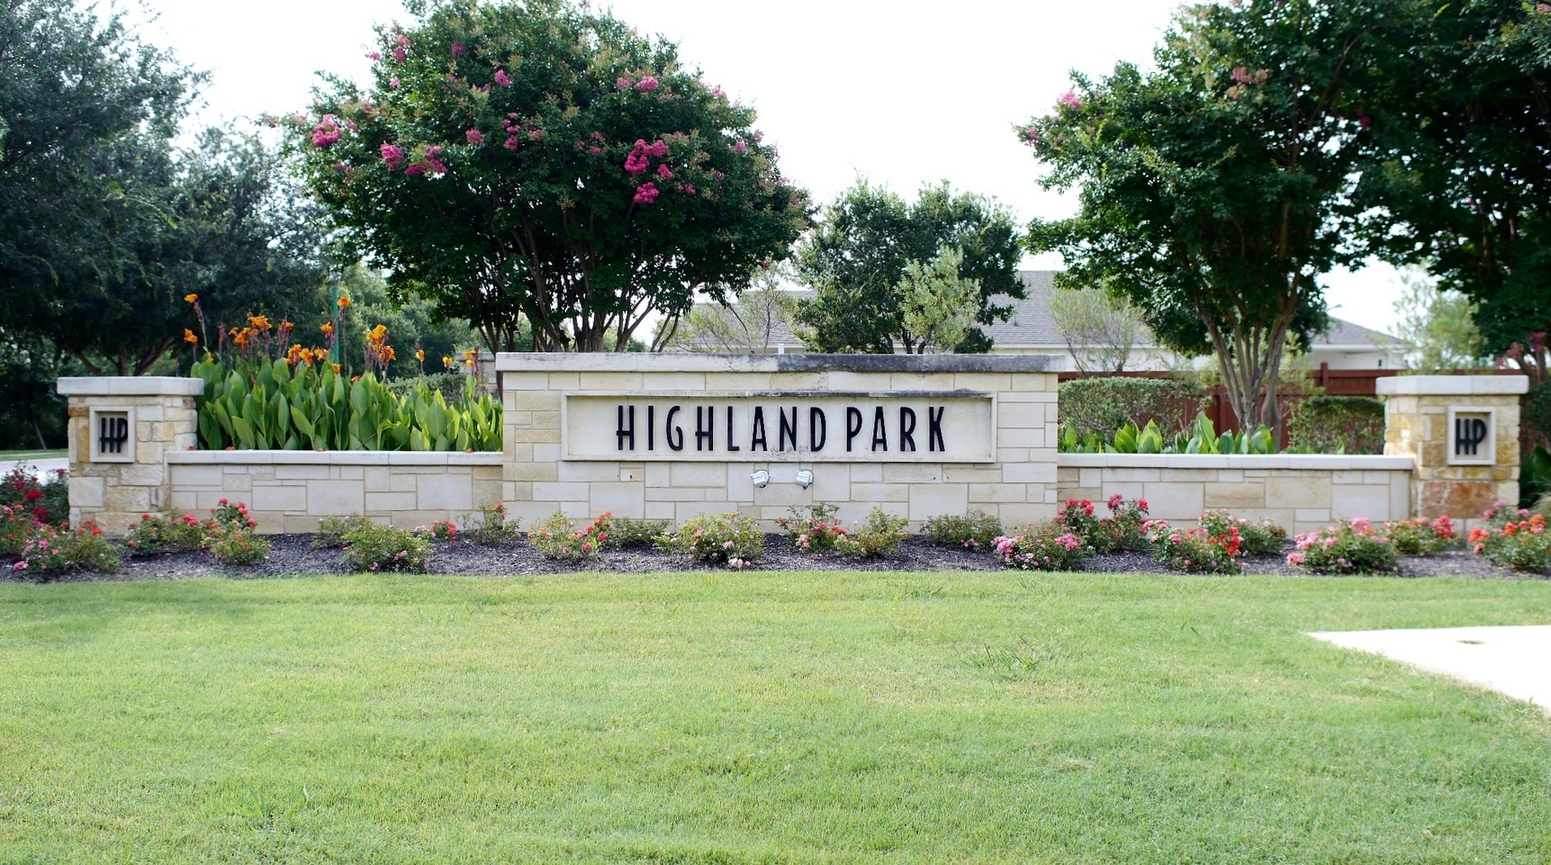 Highland Park Homes for Sale in Pflugerville TX - TCP Real Estate